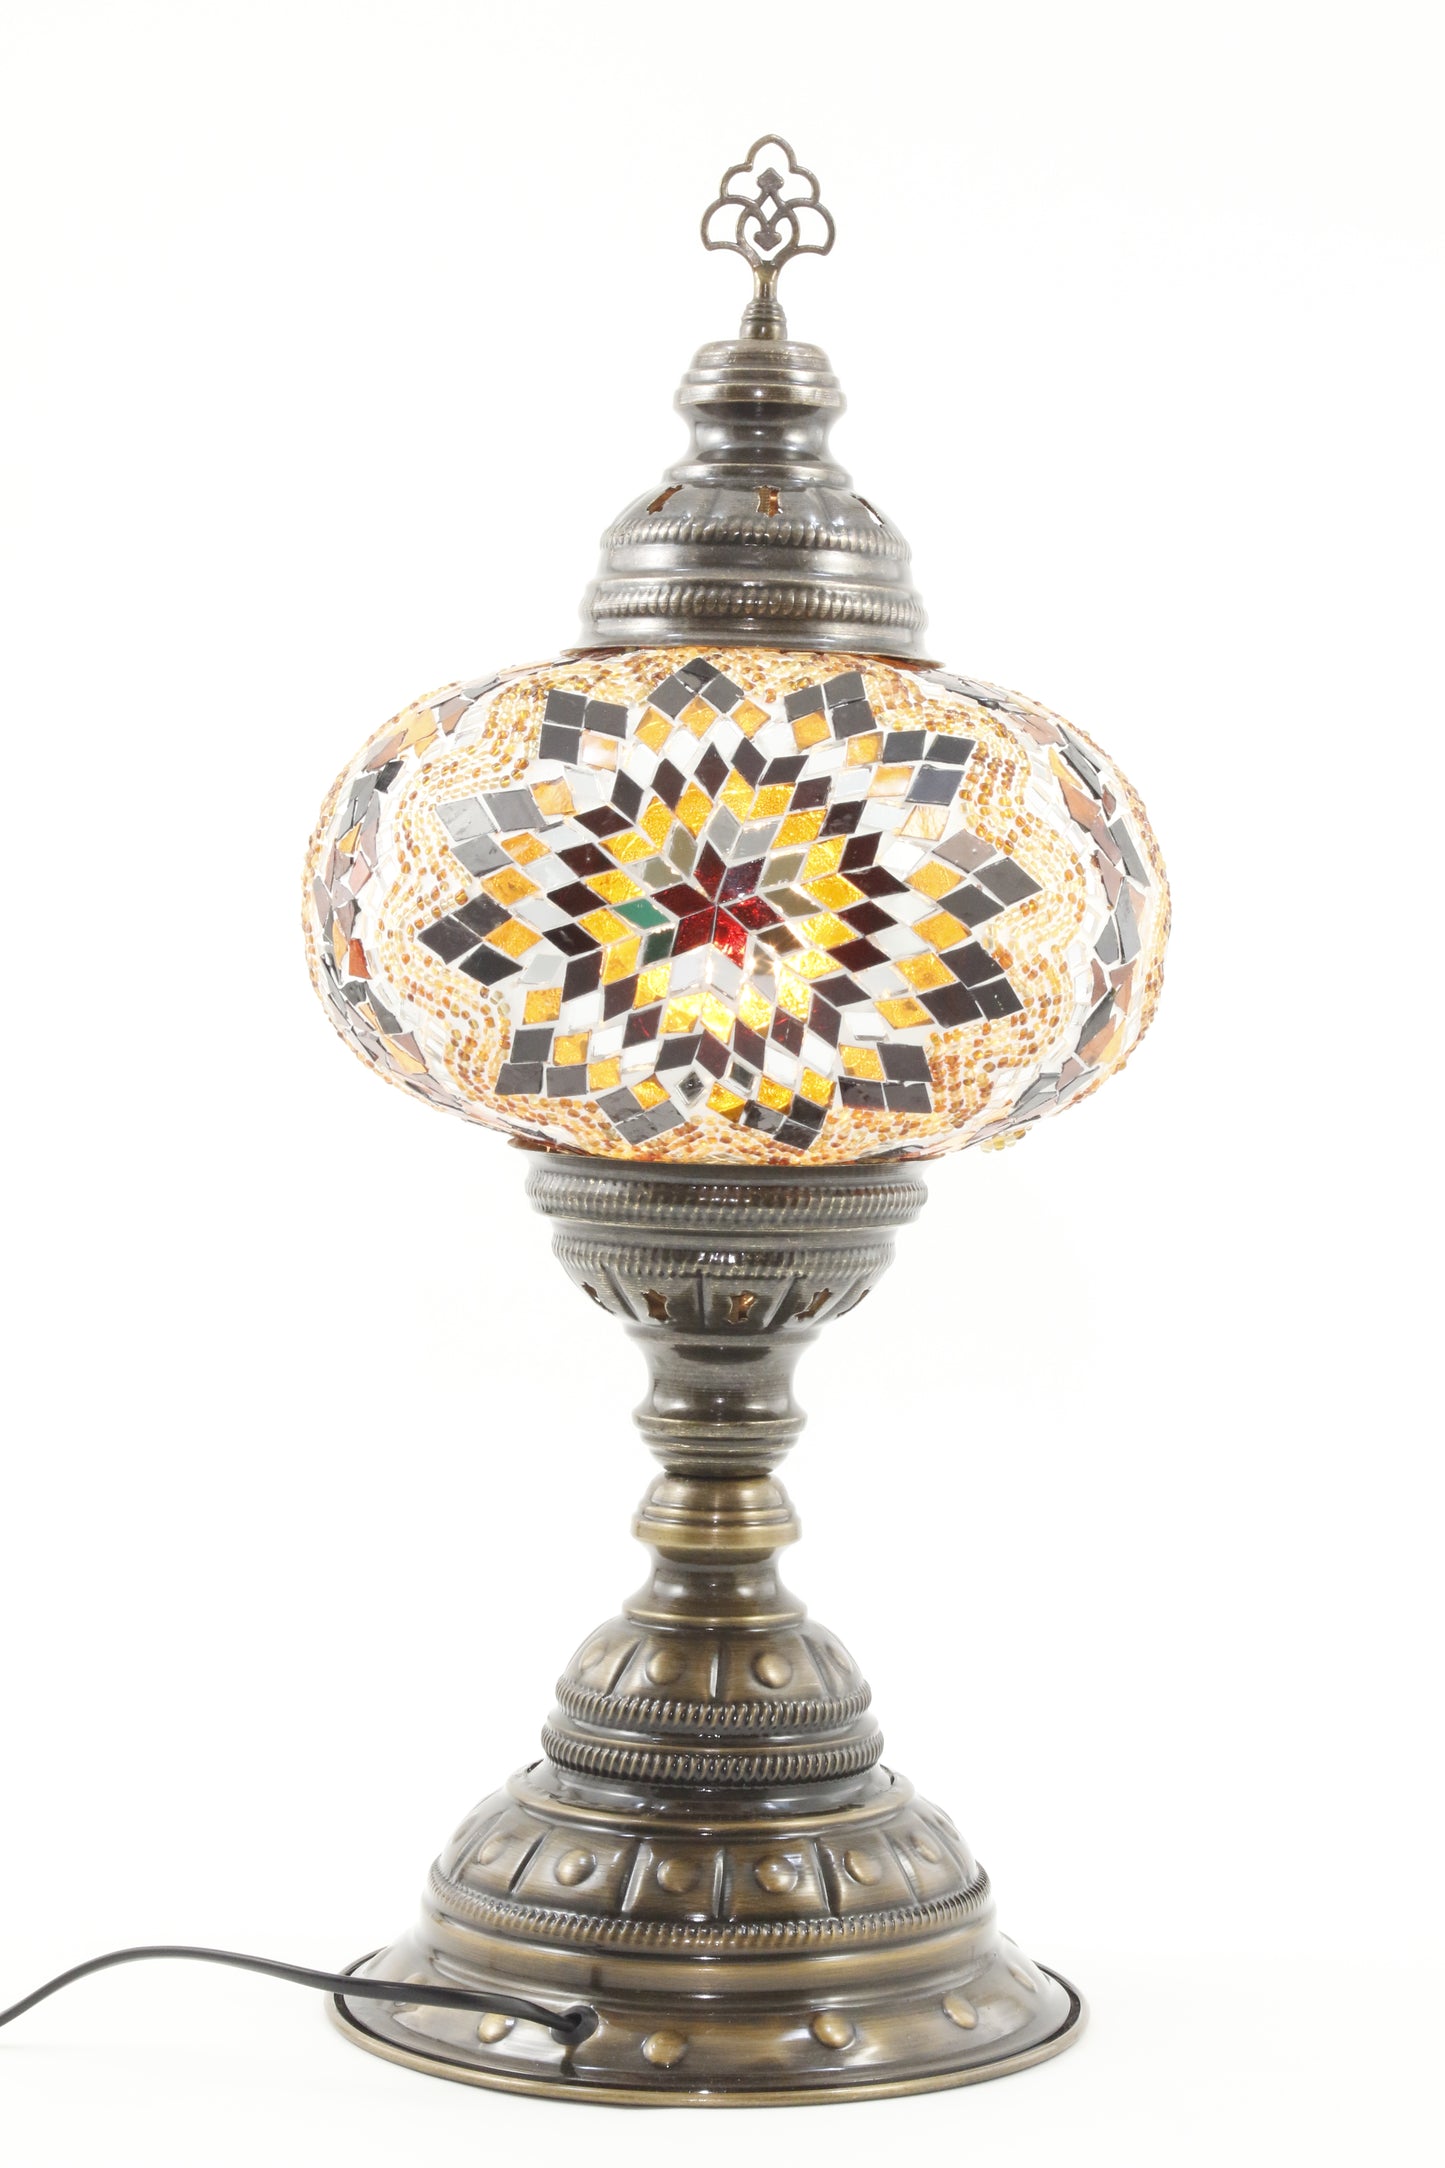 TURKISH MOSAIC TABLE LAMP MB4 AMBER-TURNED ON